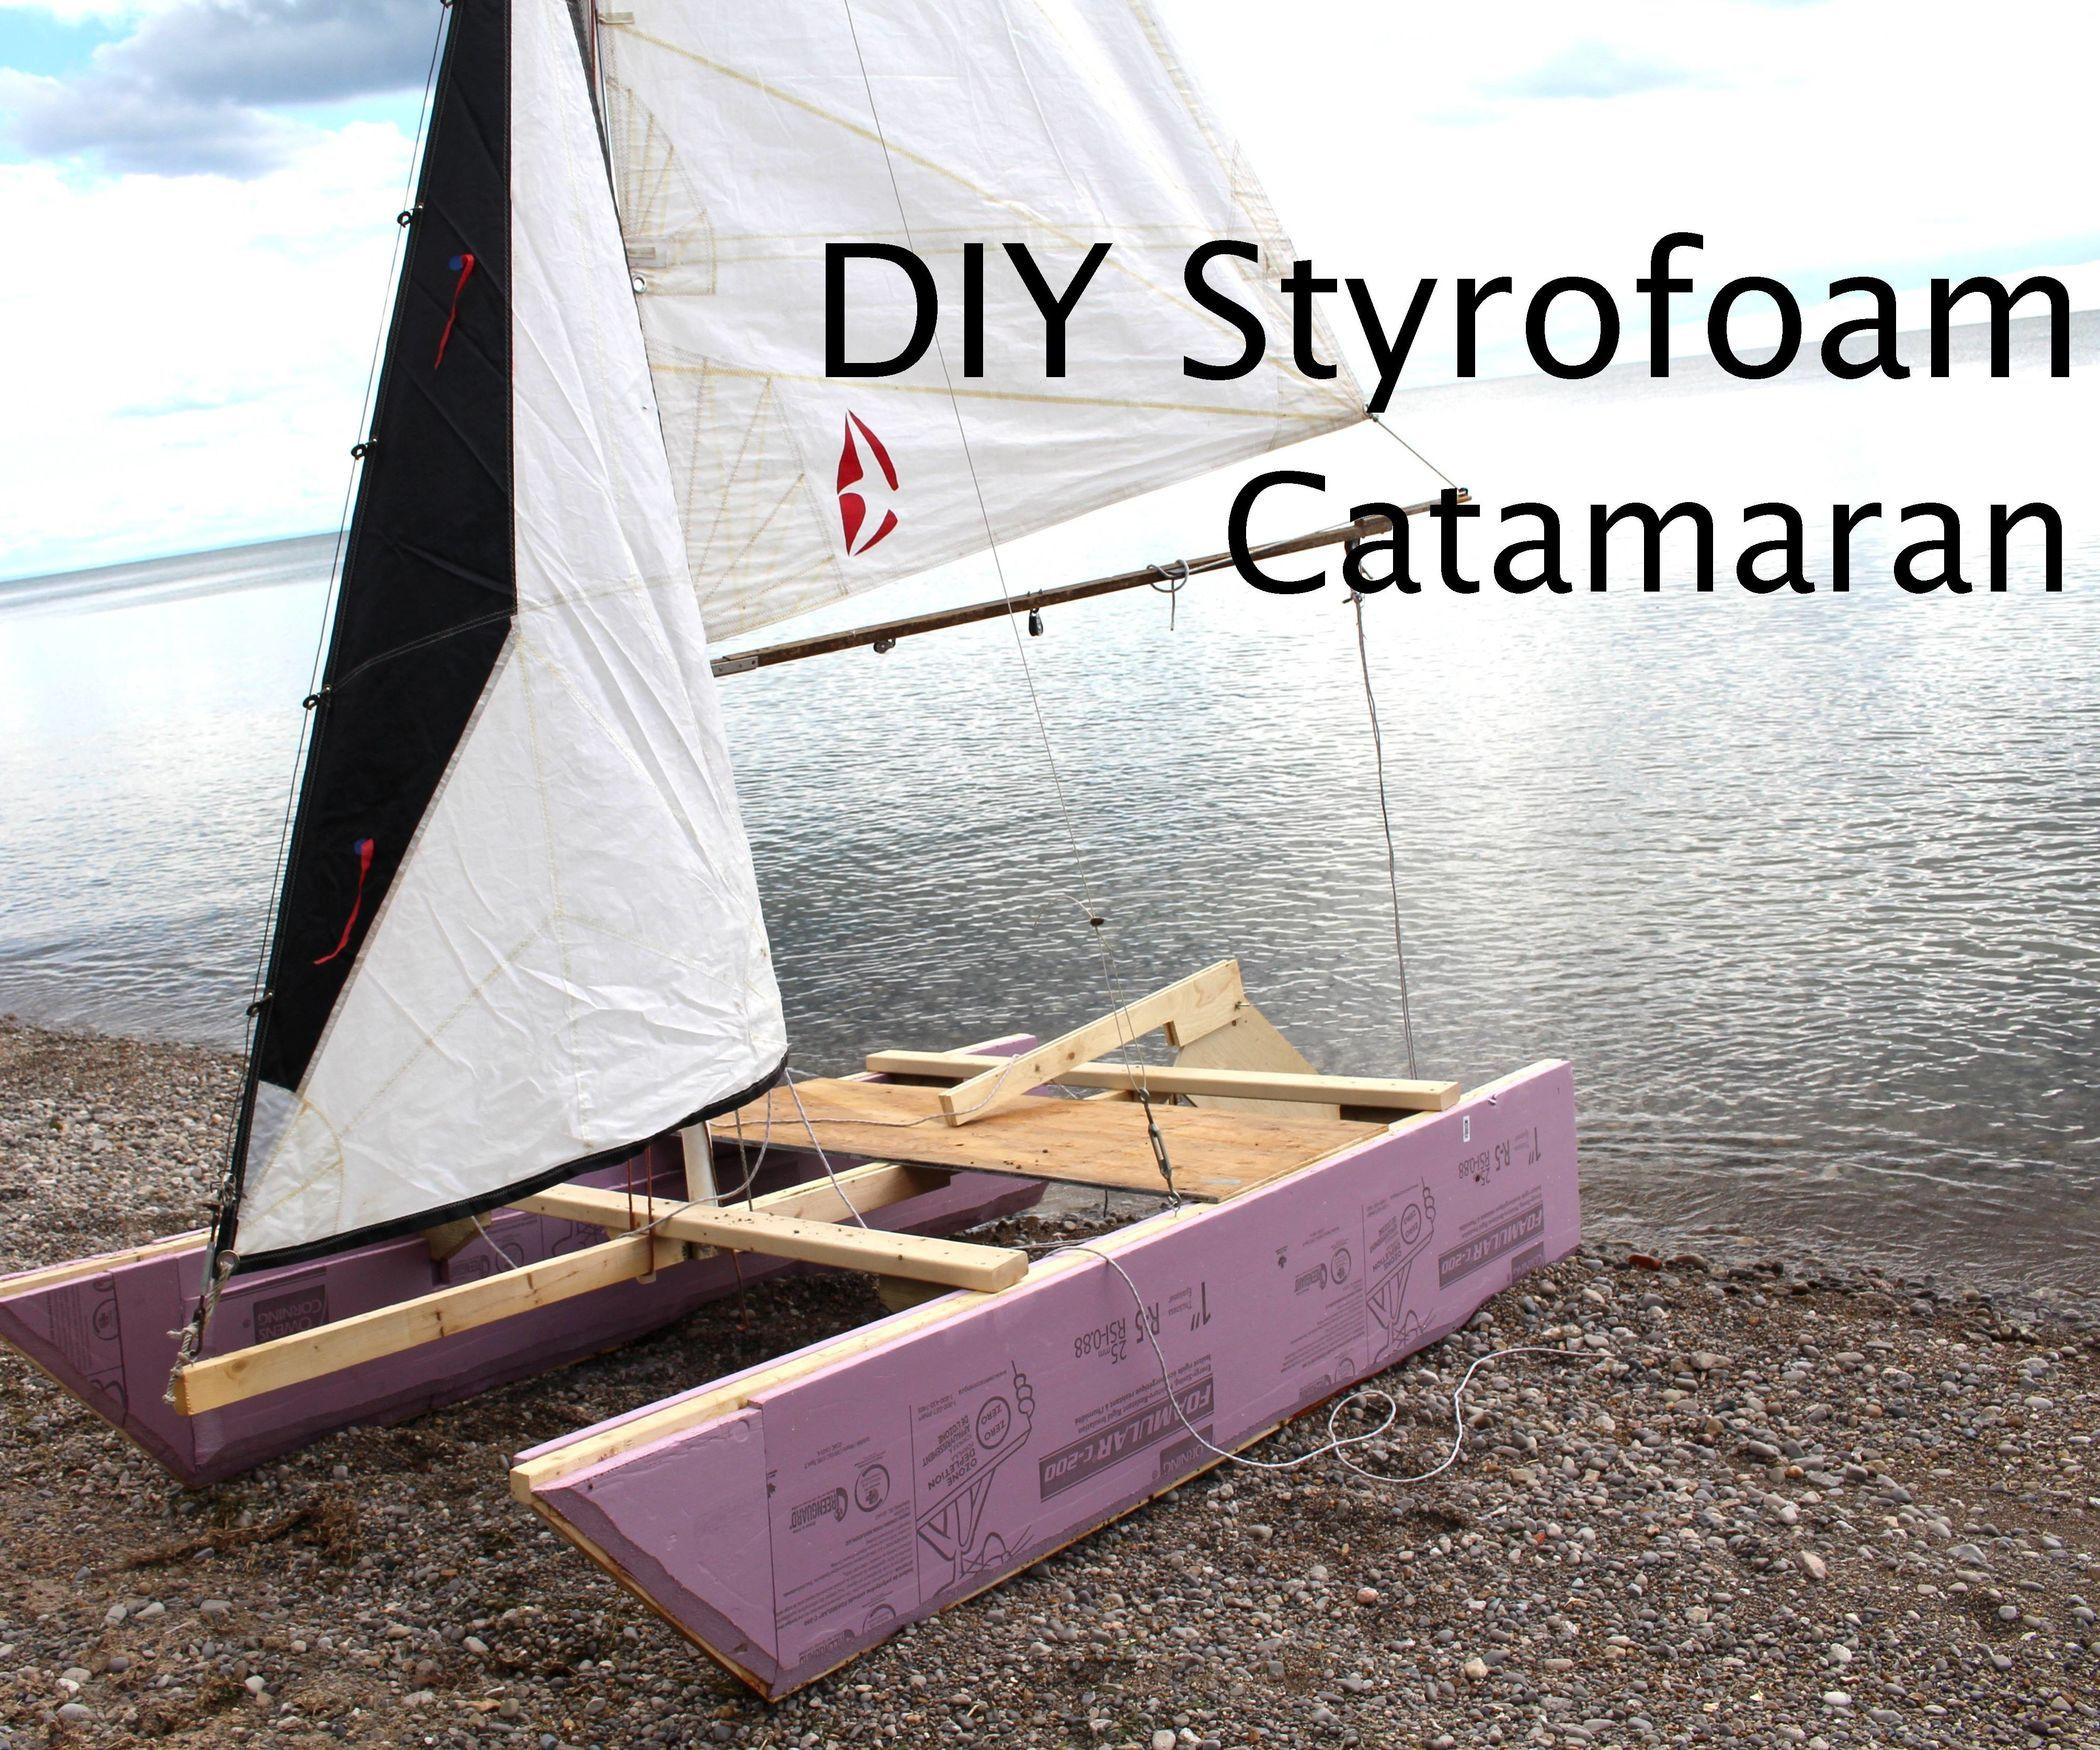 Best ideas about DIY Sailboat Plans
. Save or Pin DIY Styrofoam Catamaran 4Home Now.